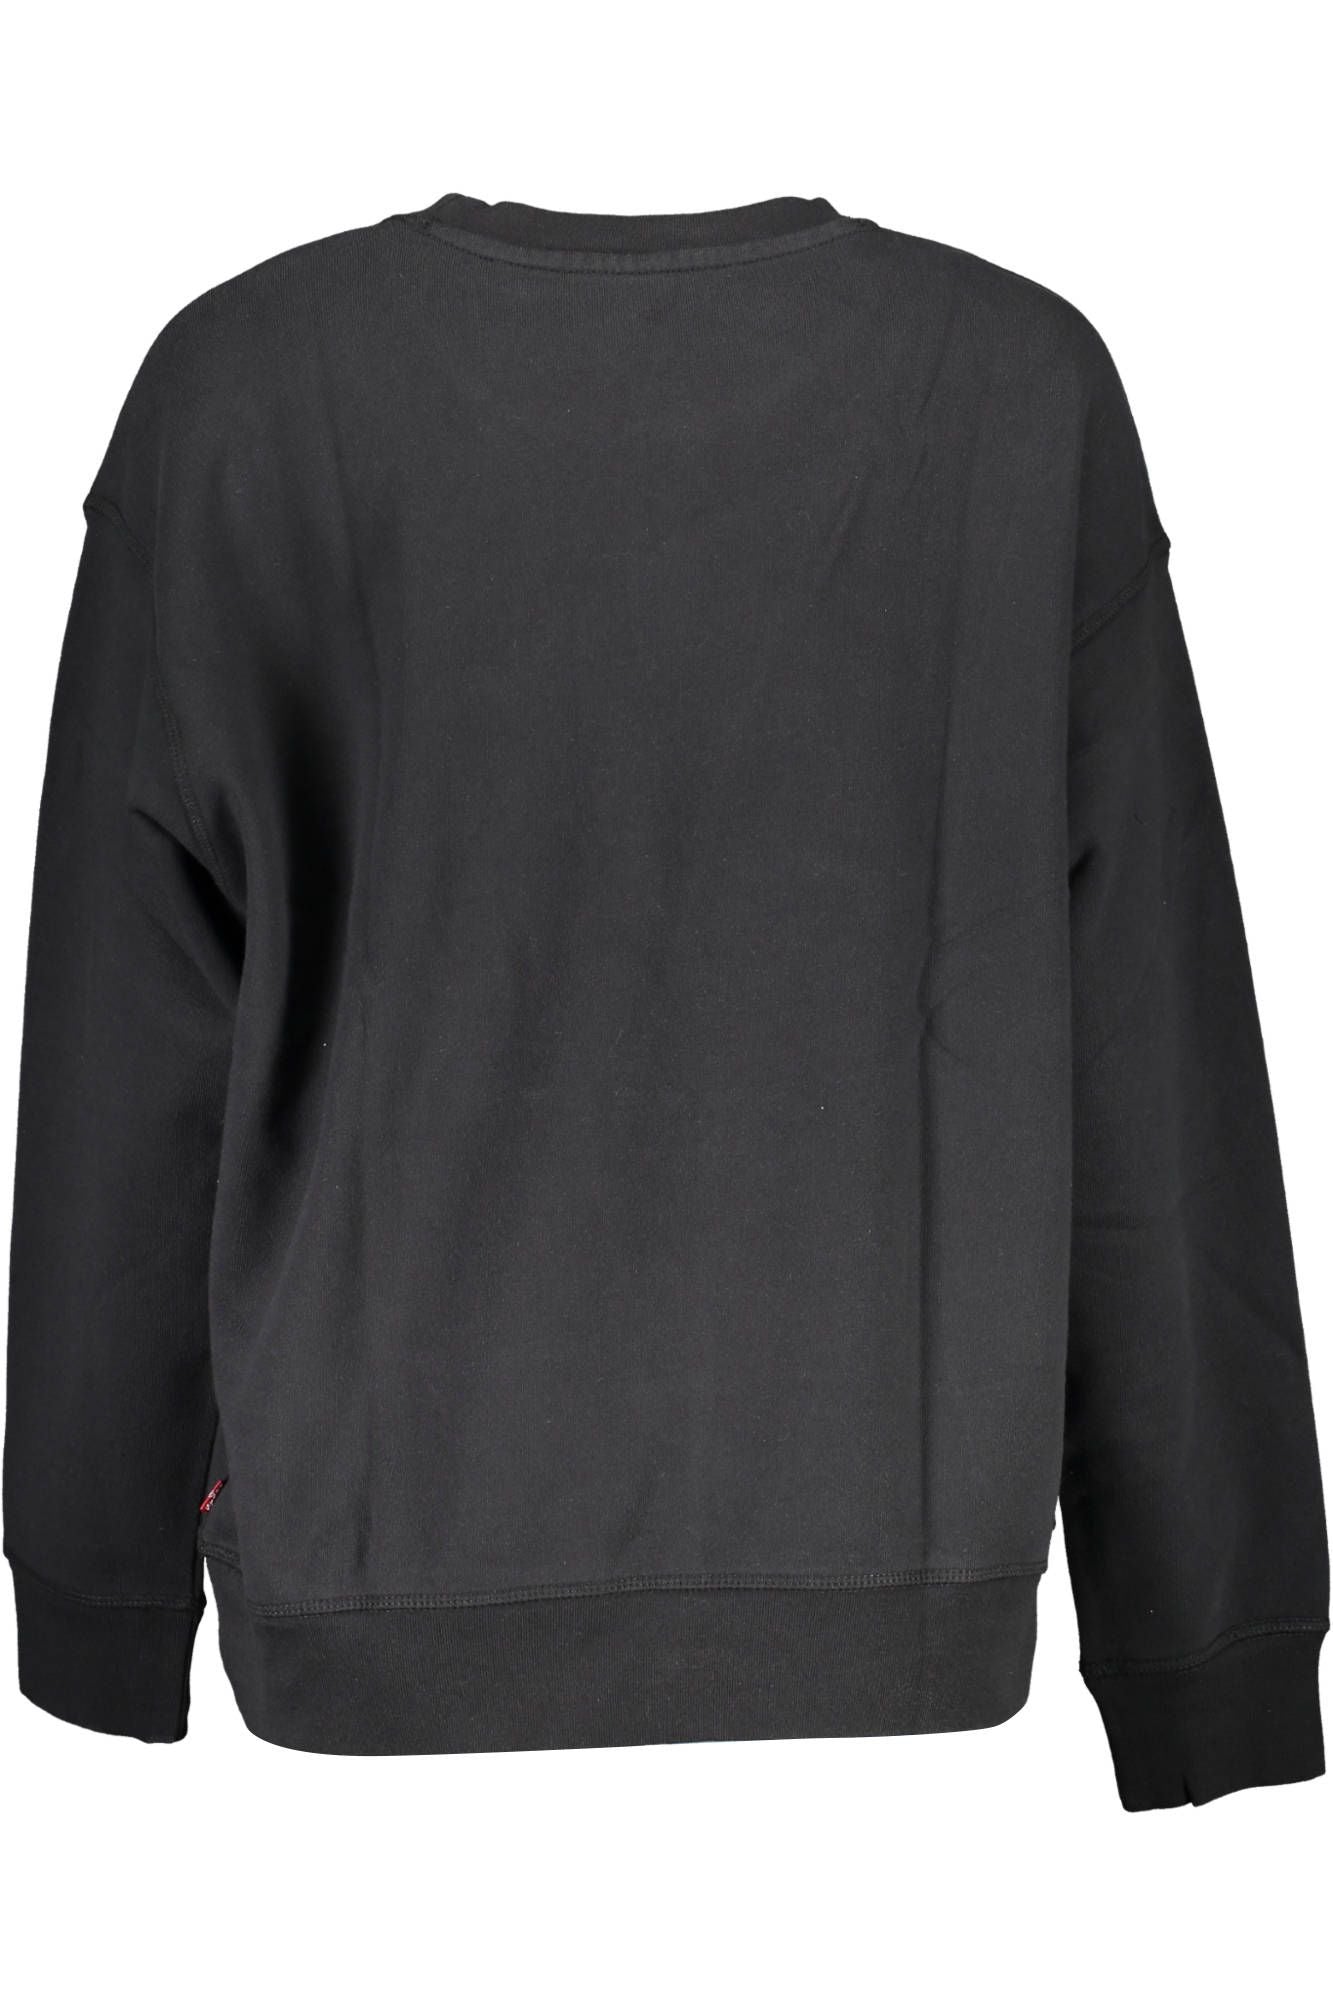 Chic Black Cotton Logo Sweatshirt - Divitiae Glamour